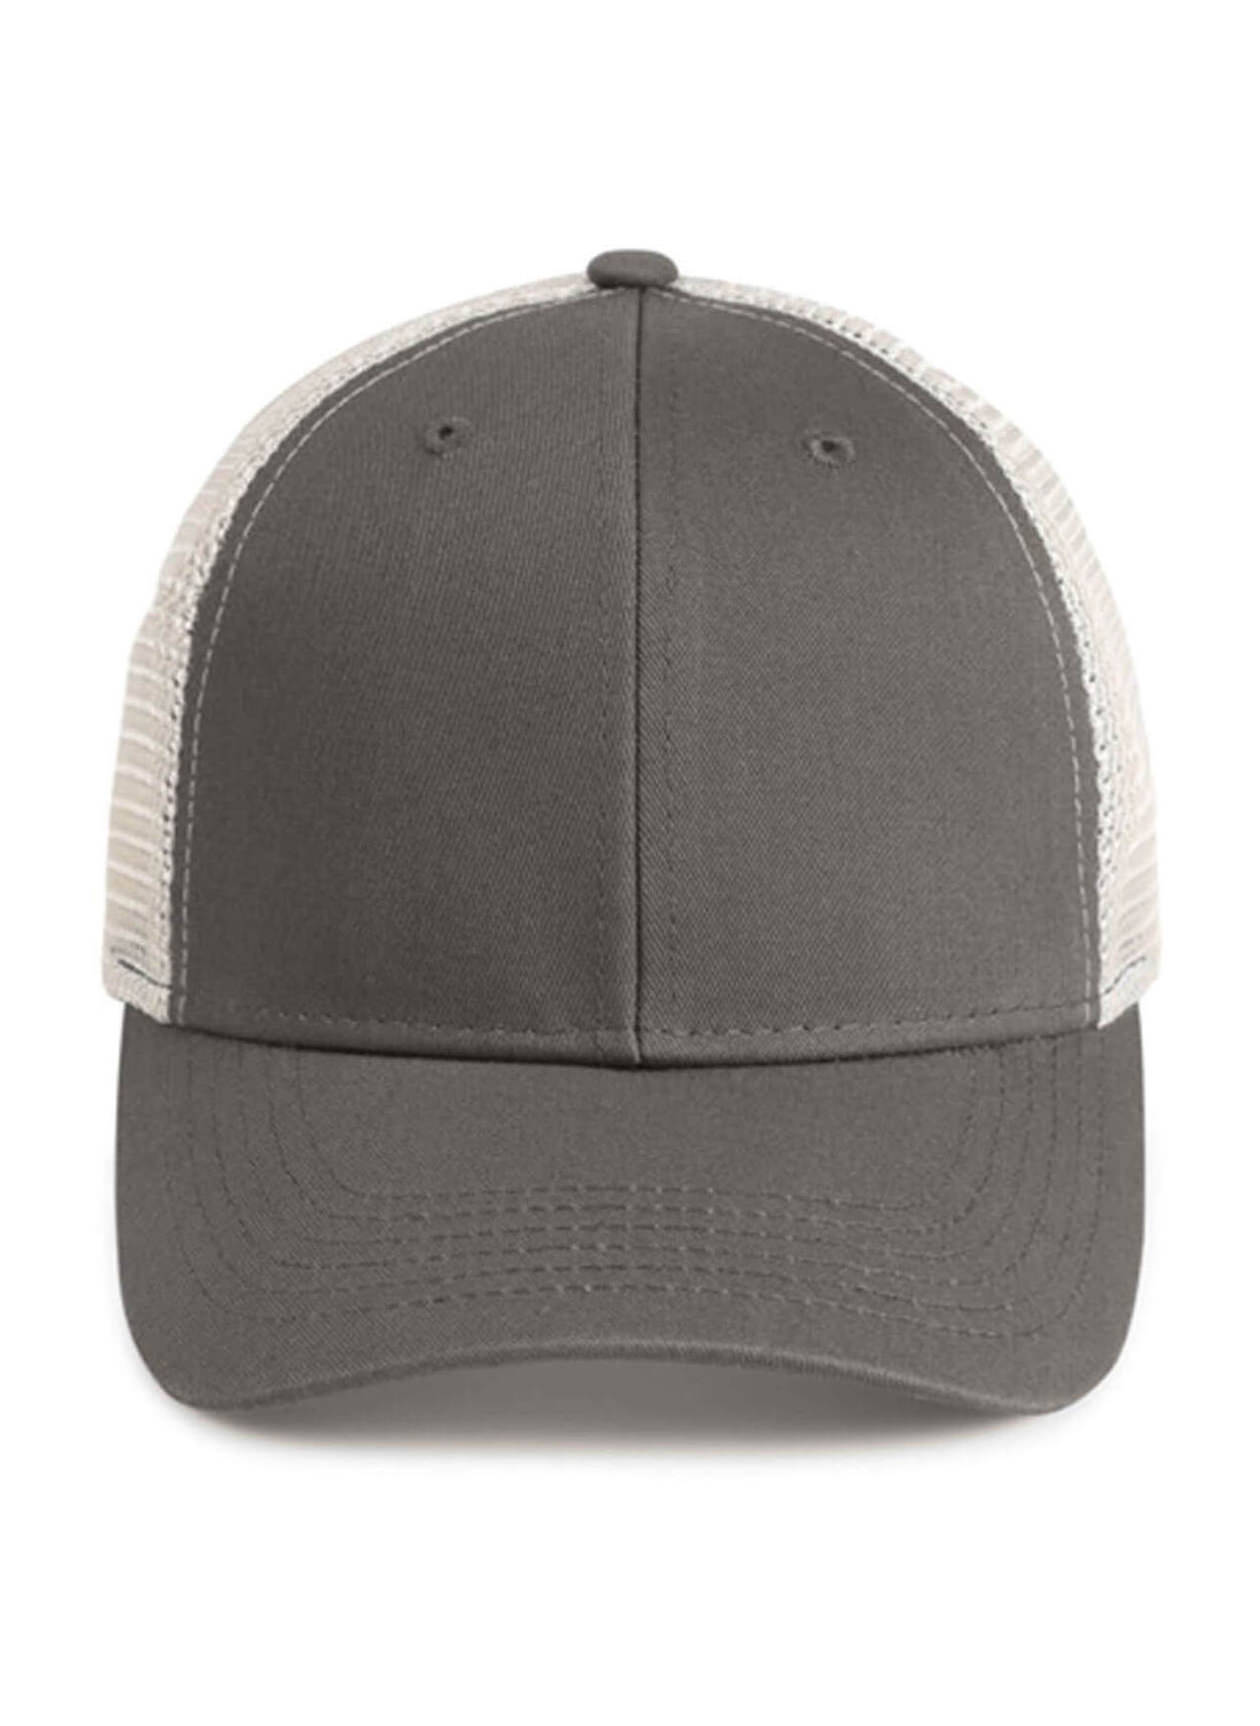 Men's Imperial Lightweight Adjustable Cotton Cap